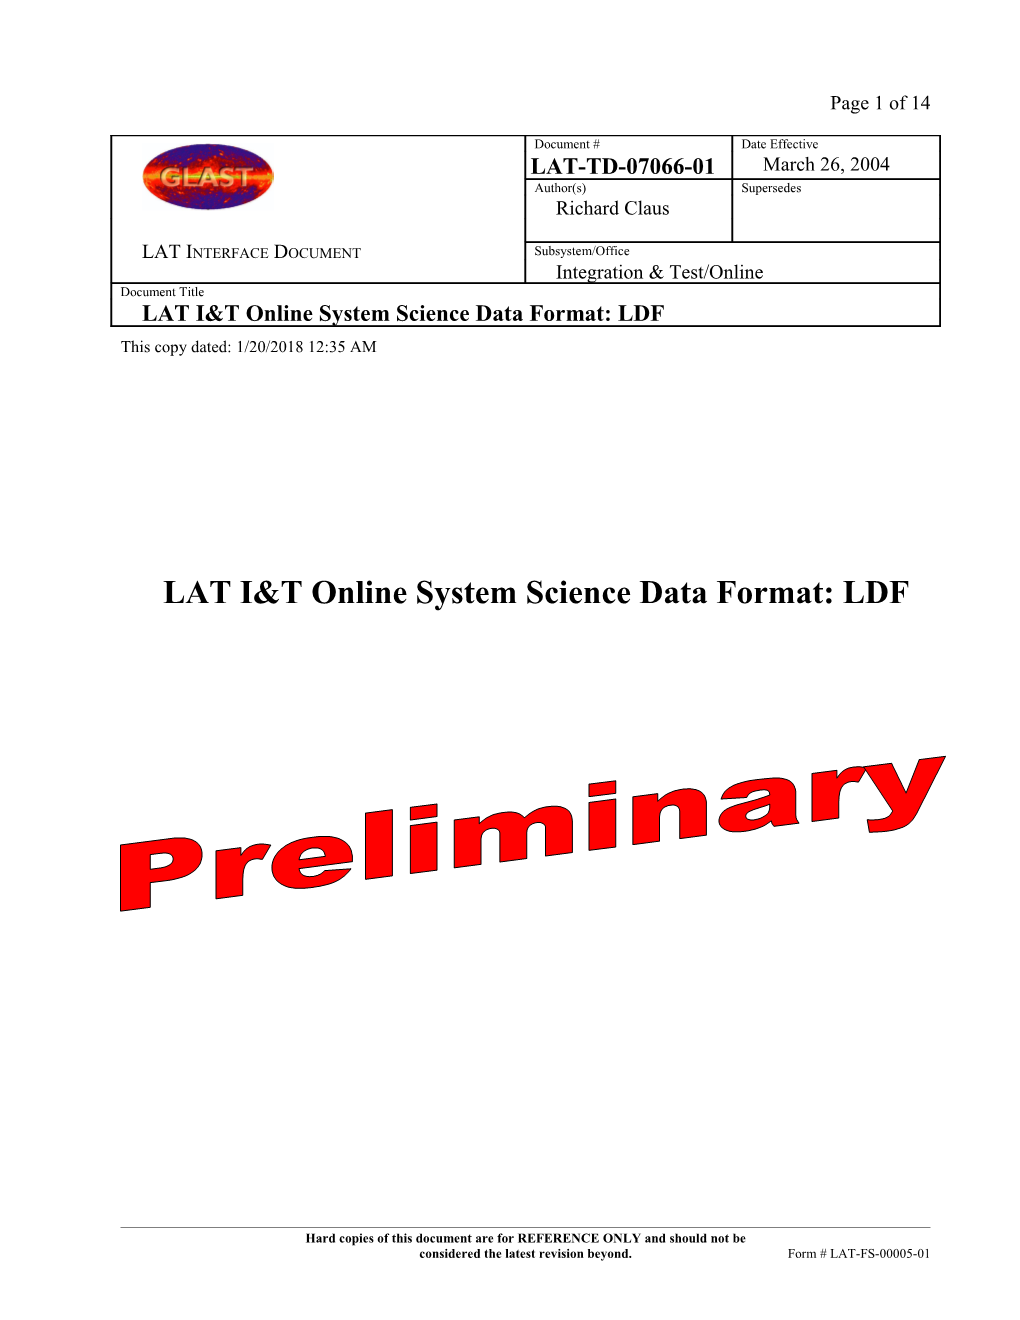 GLAST LAT I&T Online System Science Data Format